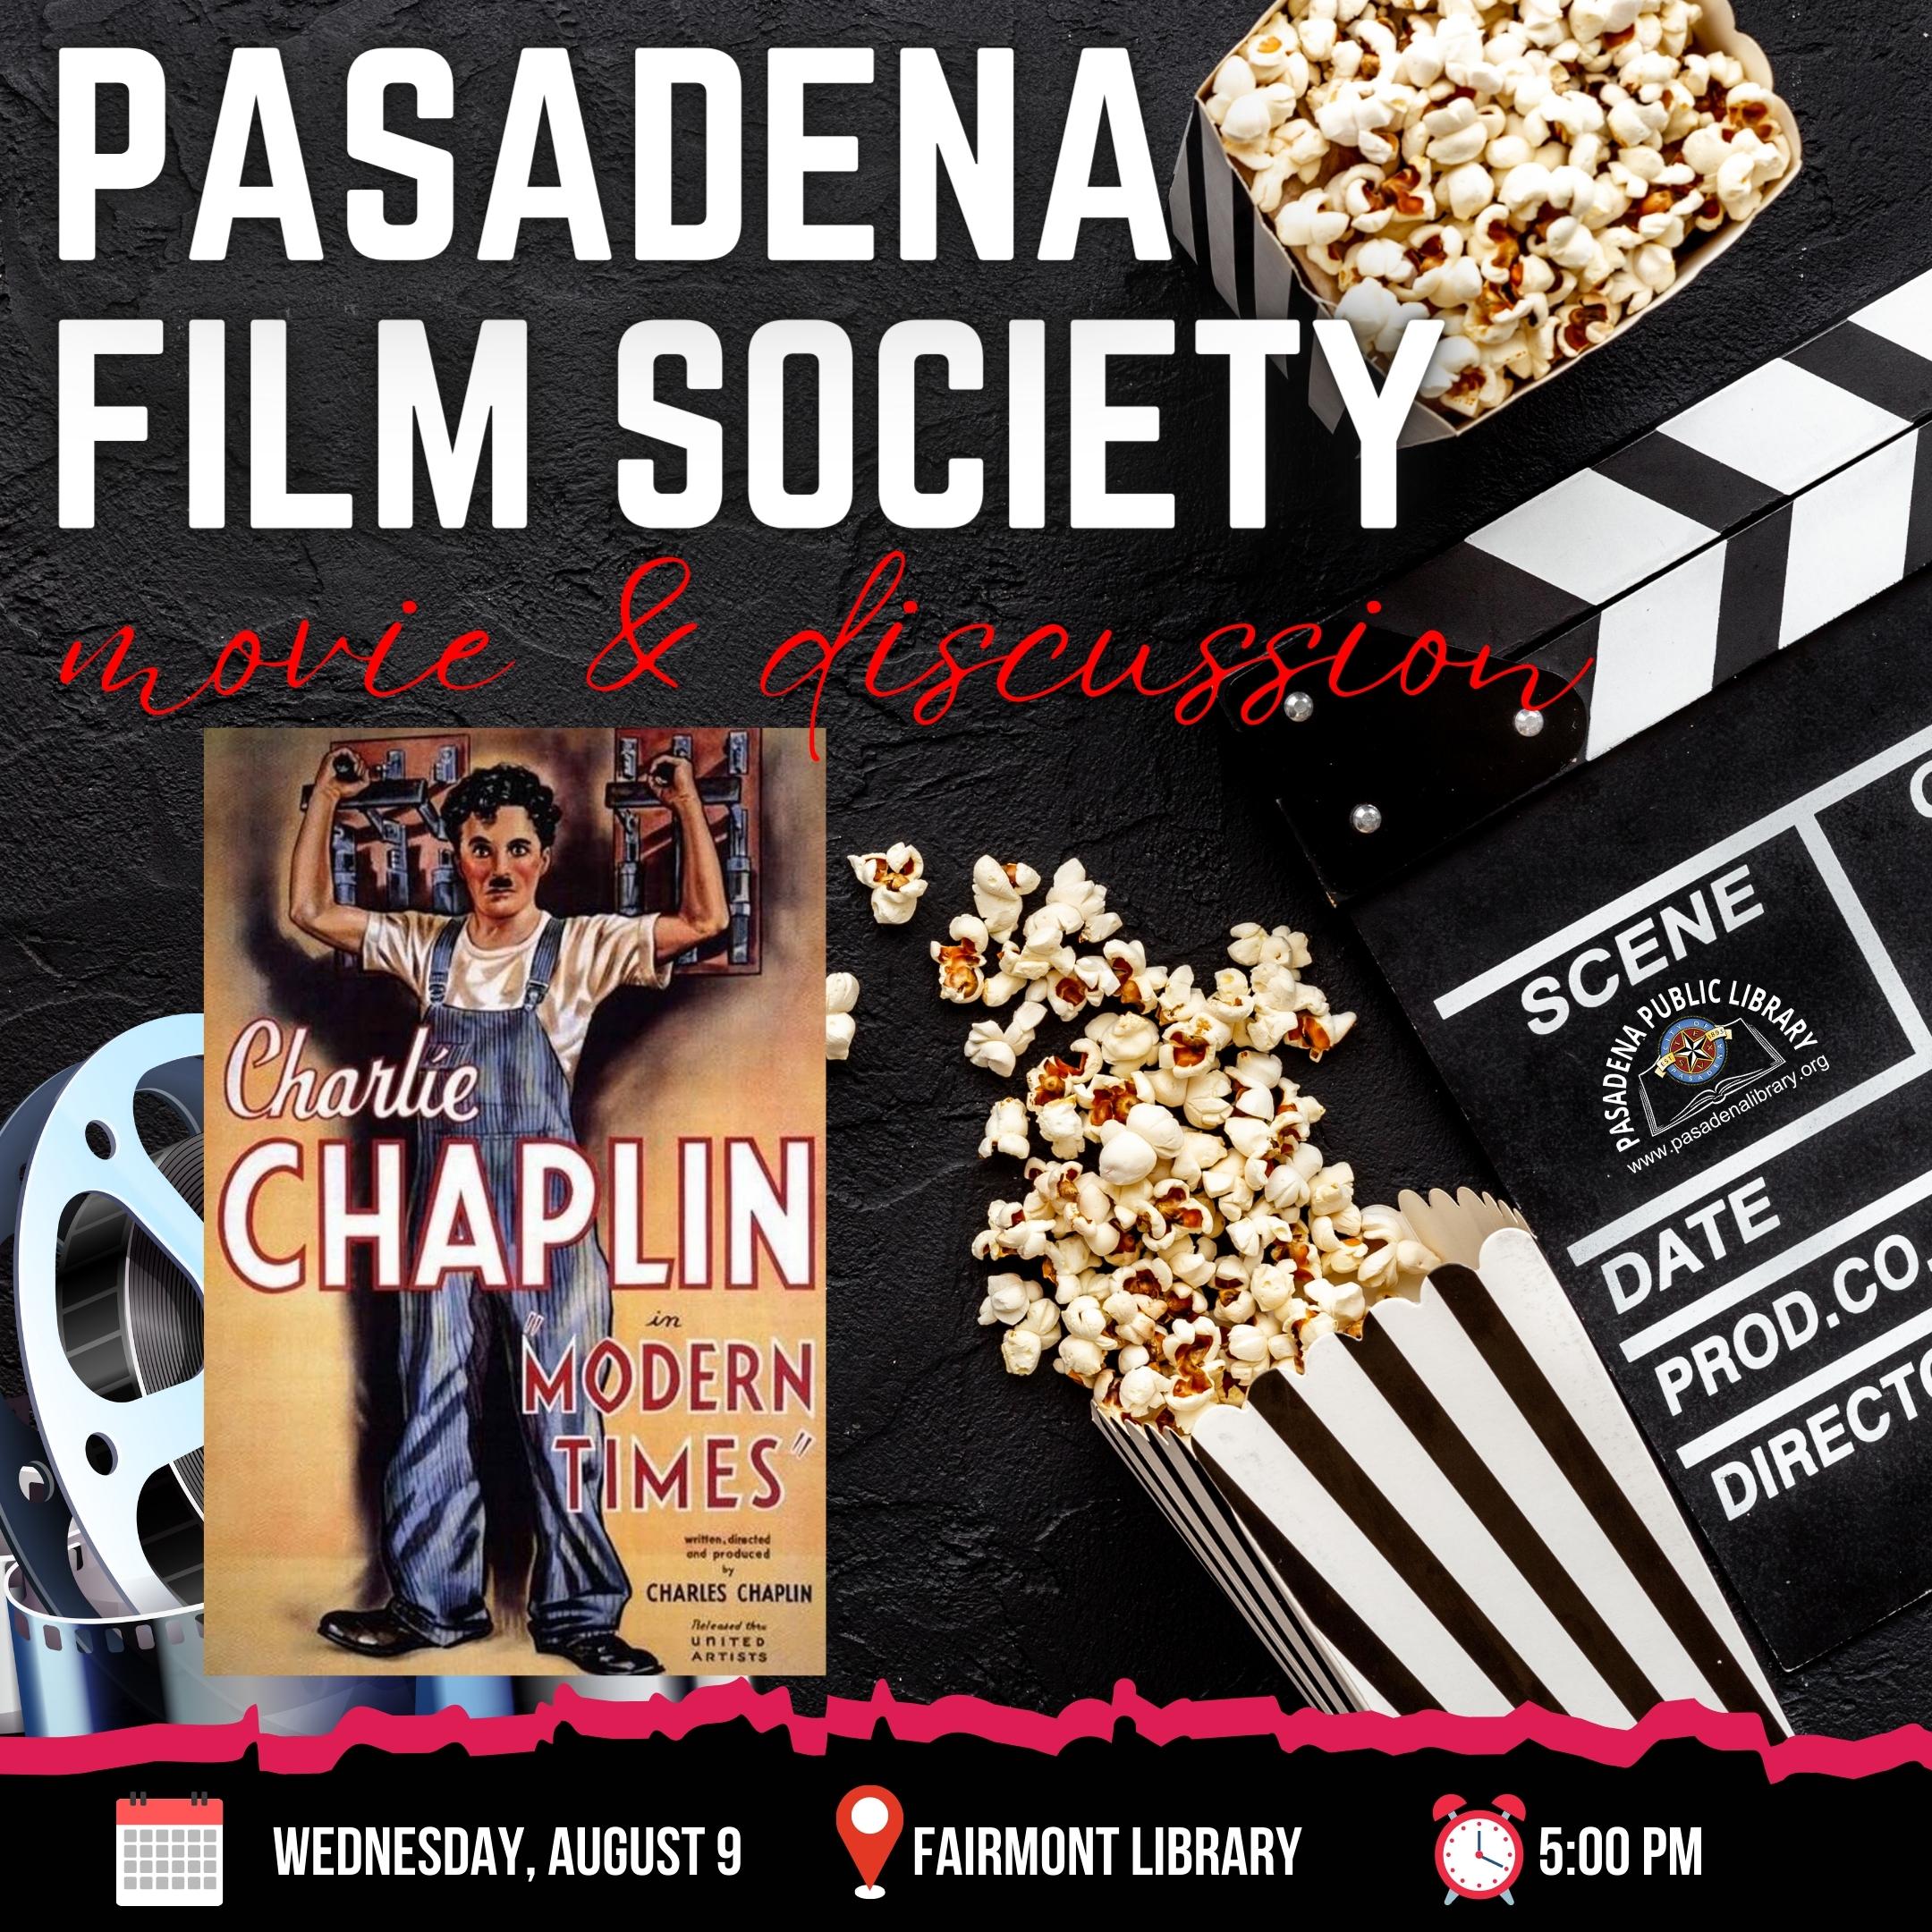 Pasadena Fil Society showing Modern Times